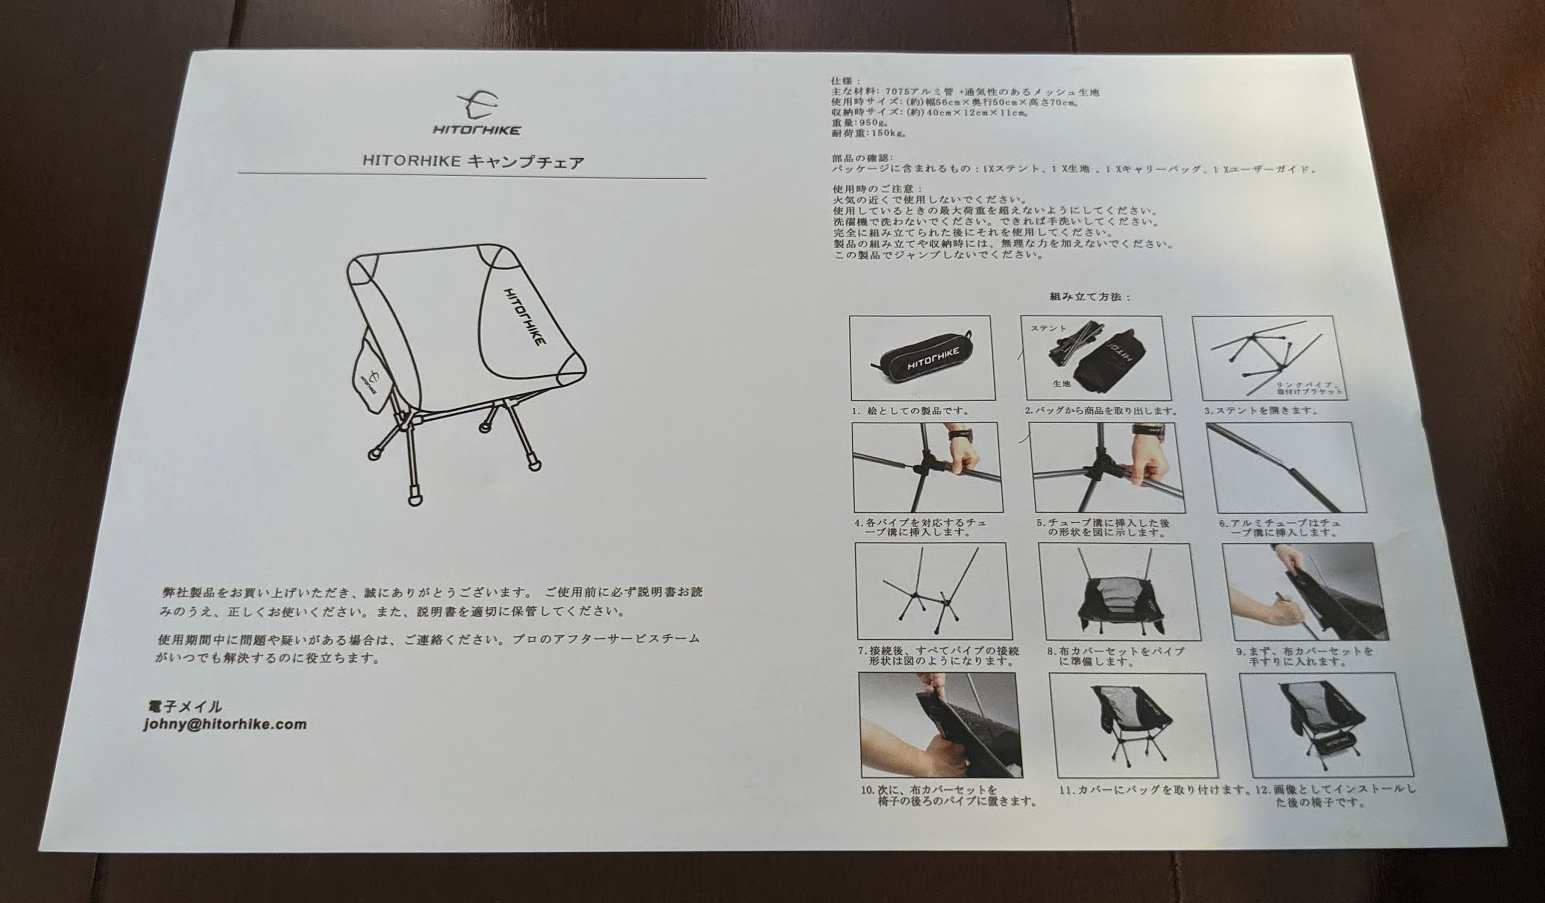 HITORHIKE(ヒットオアハイク) 折りたたみ椅子 組み立て説明書